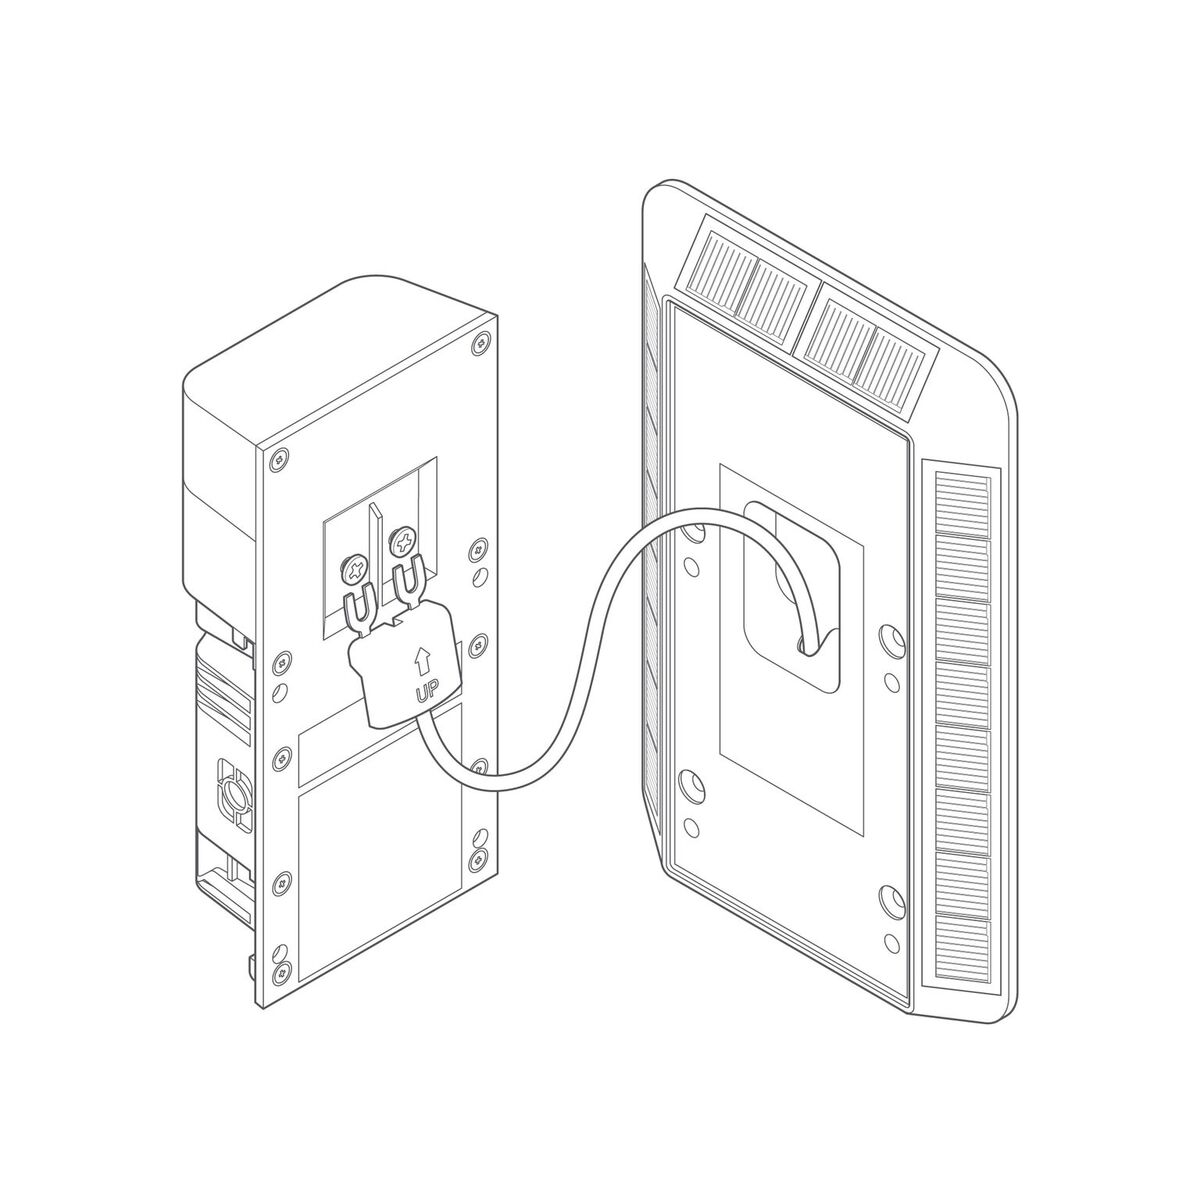 Battery Doorbell Plus + Solar Charger for Battery Doorbells (2nd Generation)